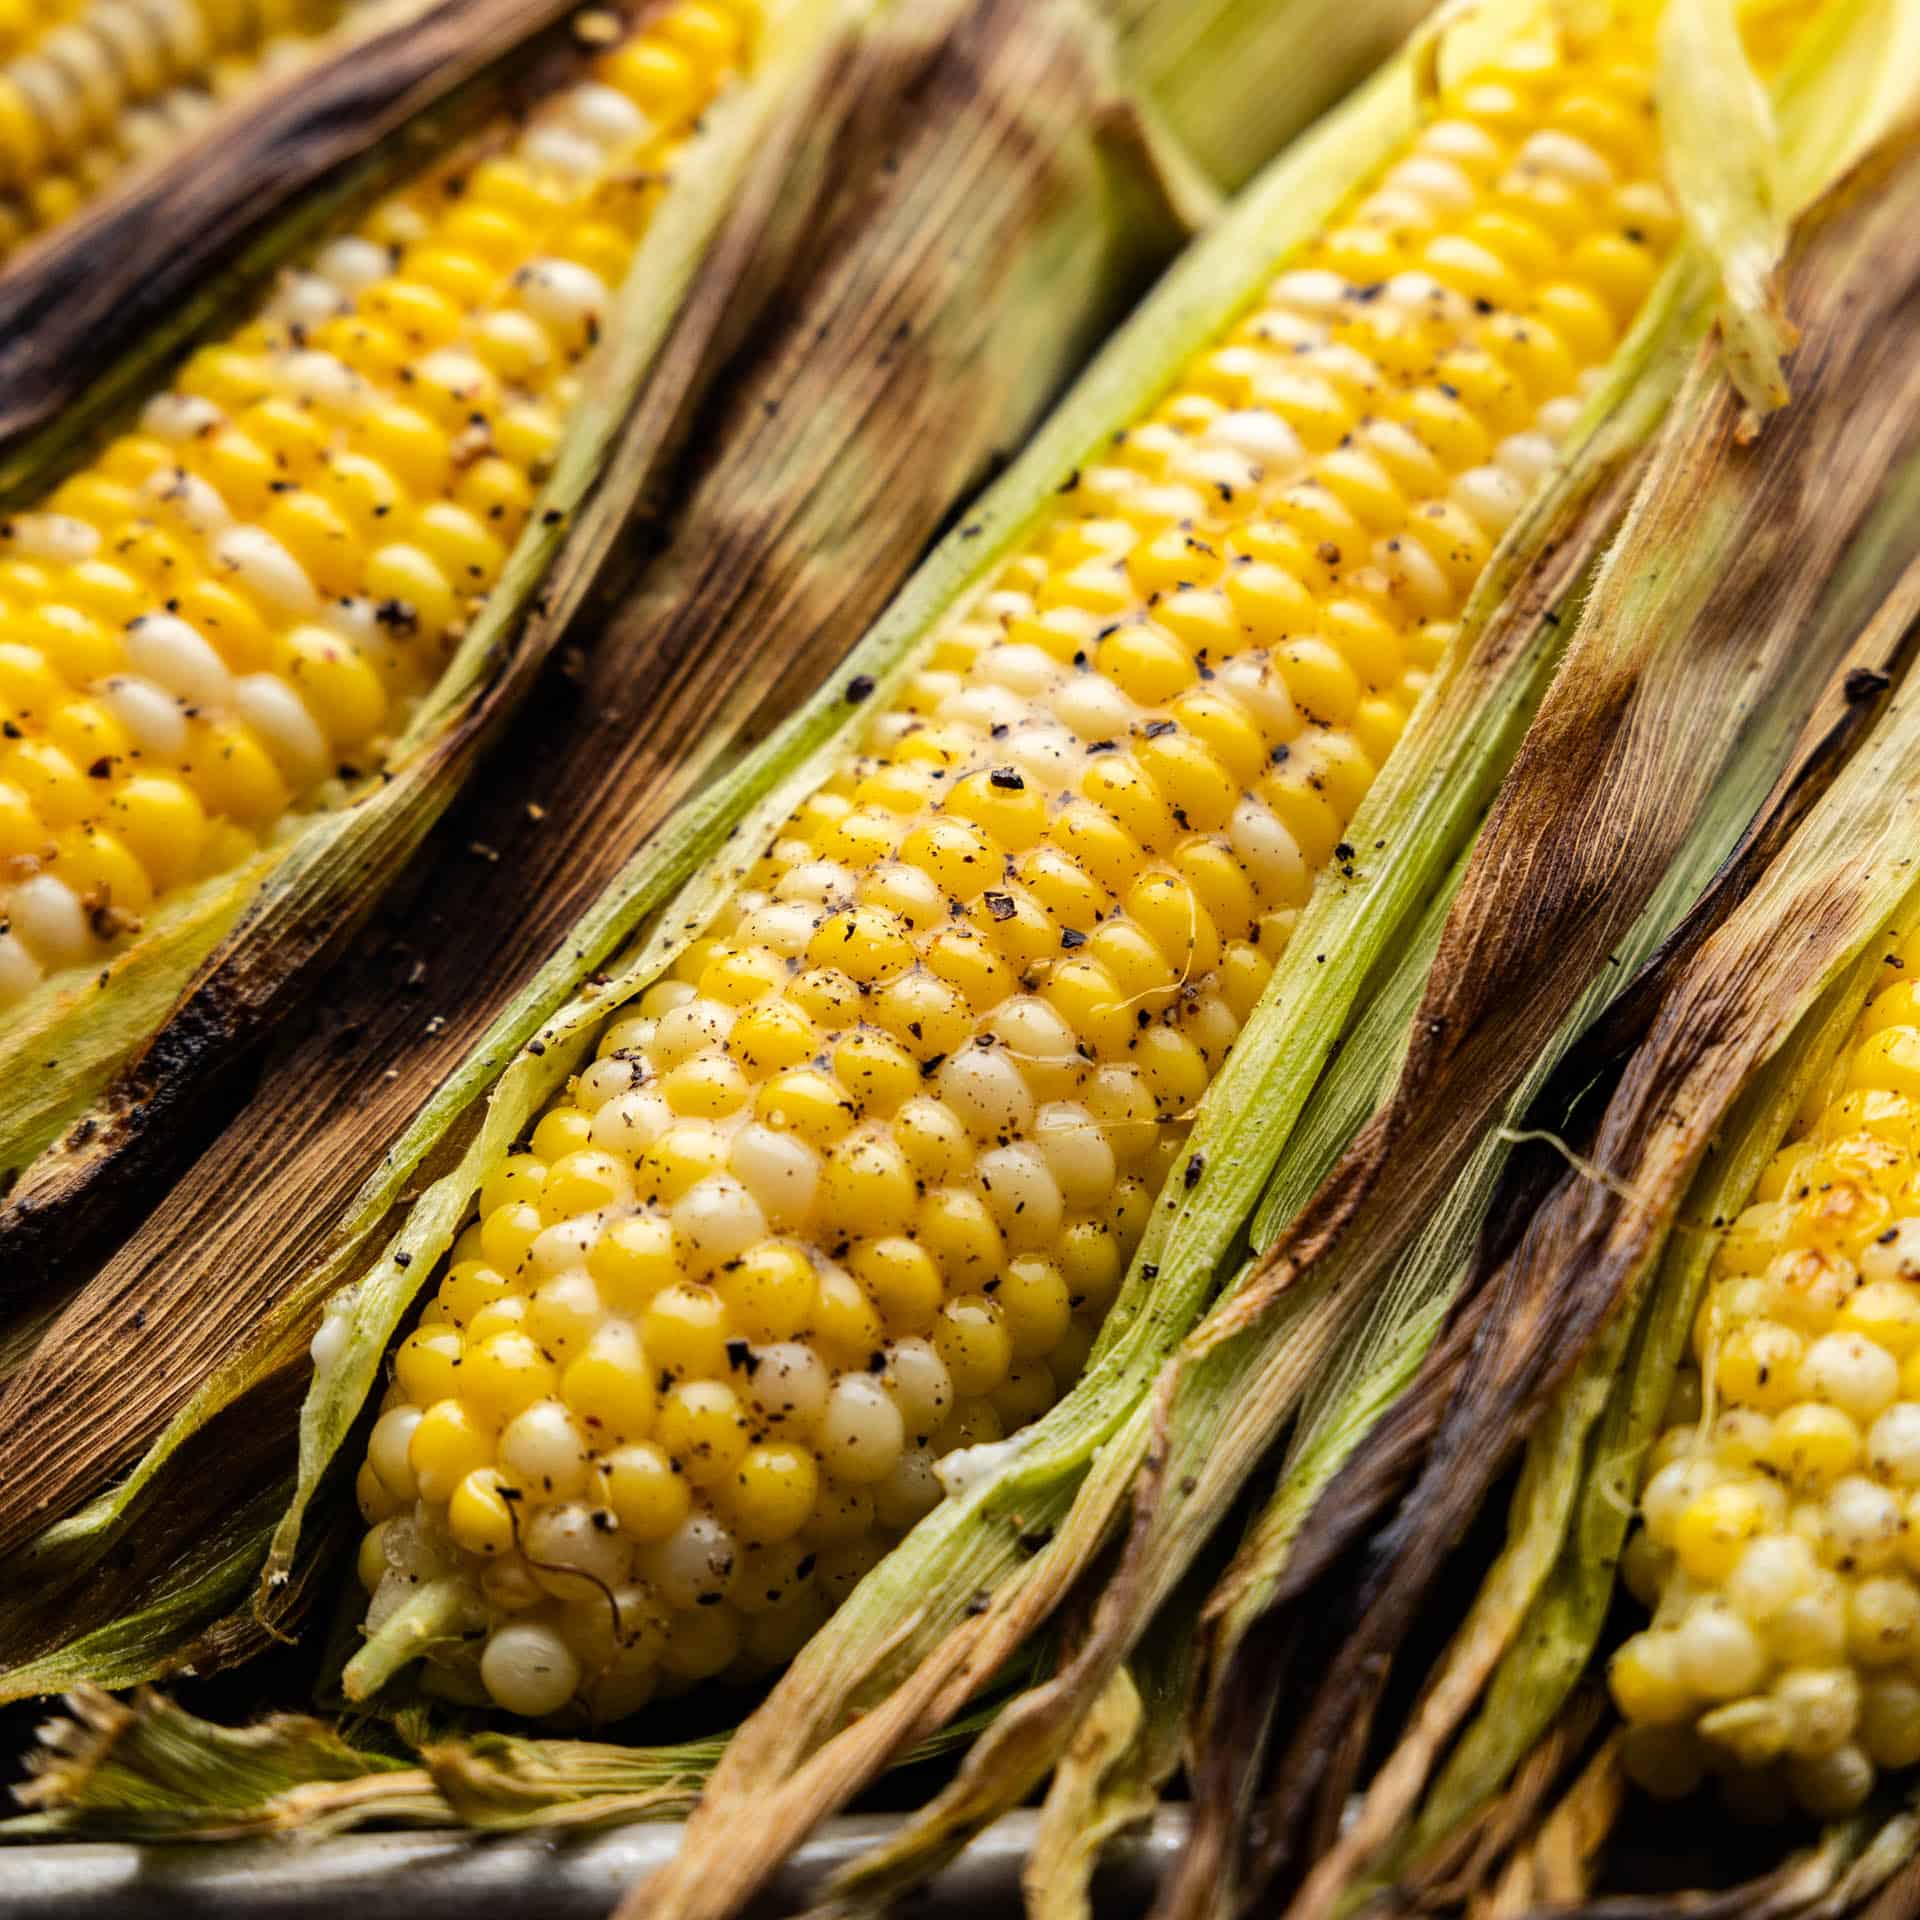 Three ears of corn on the cob with peeled back husks.